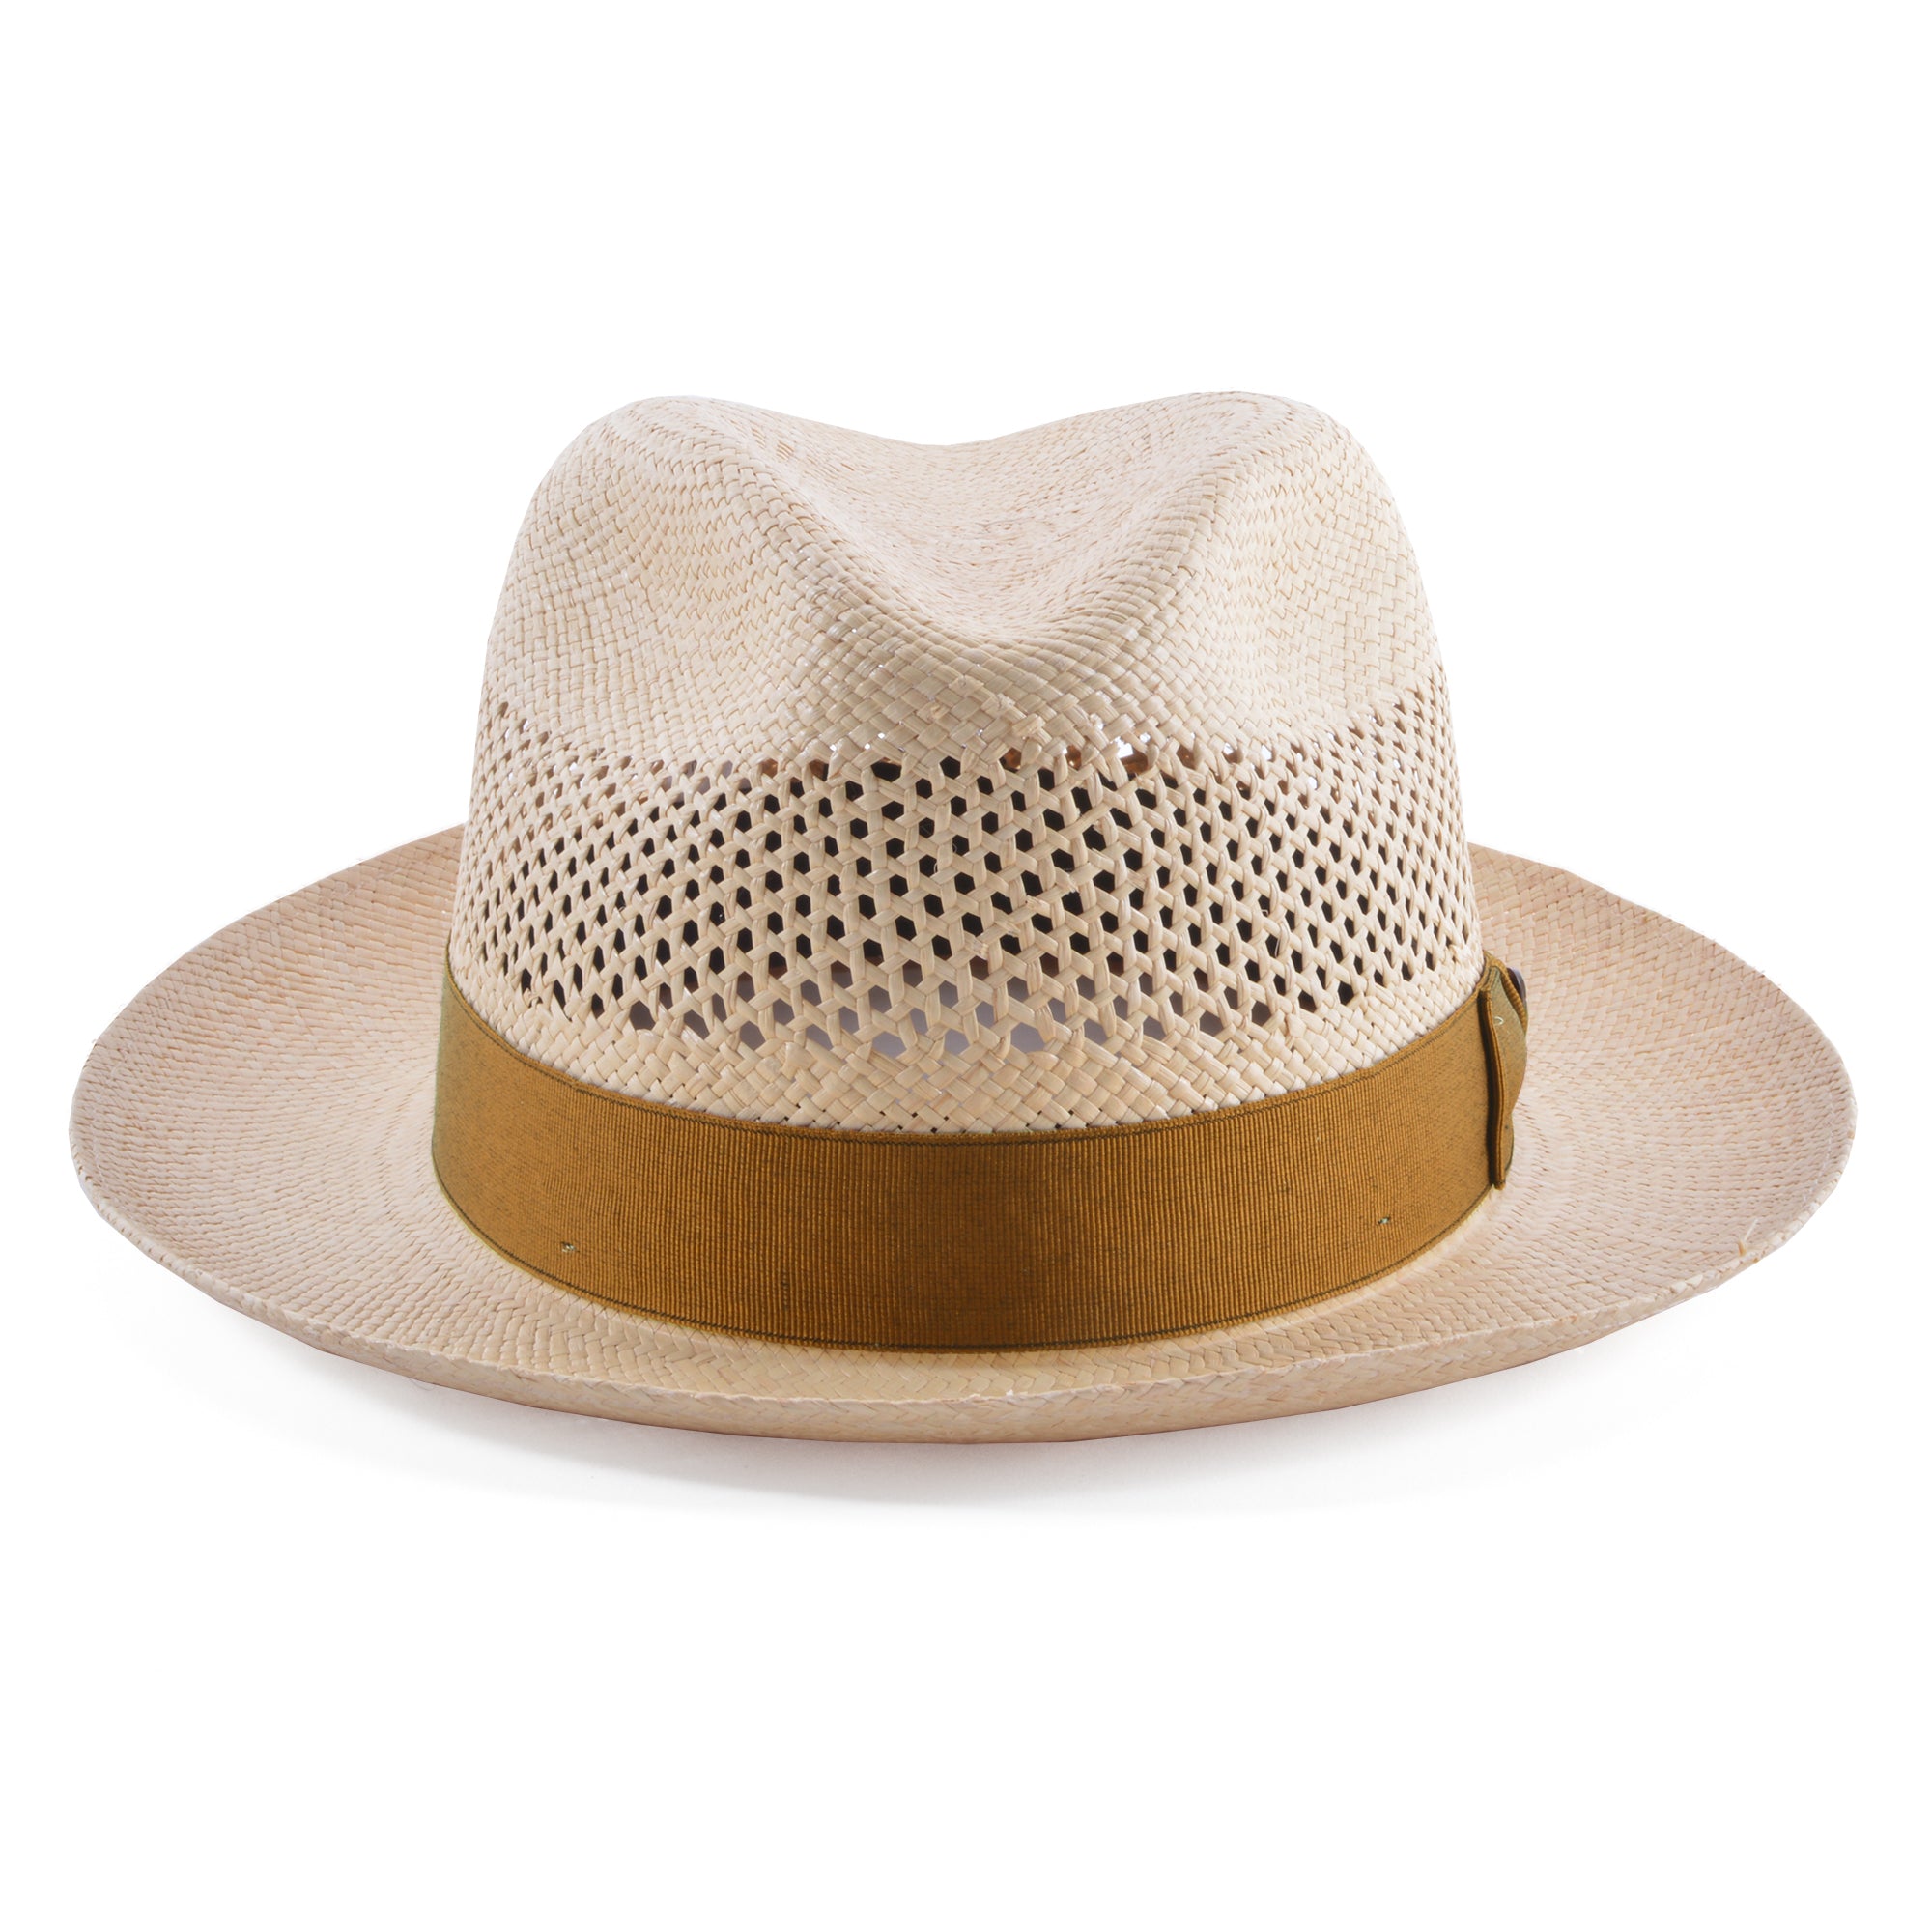 Stetson The Moor Panama Straw Fedora Hat with Box - 0